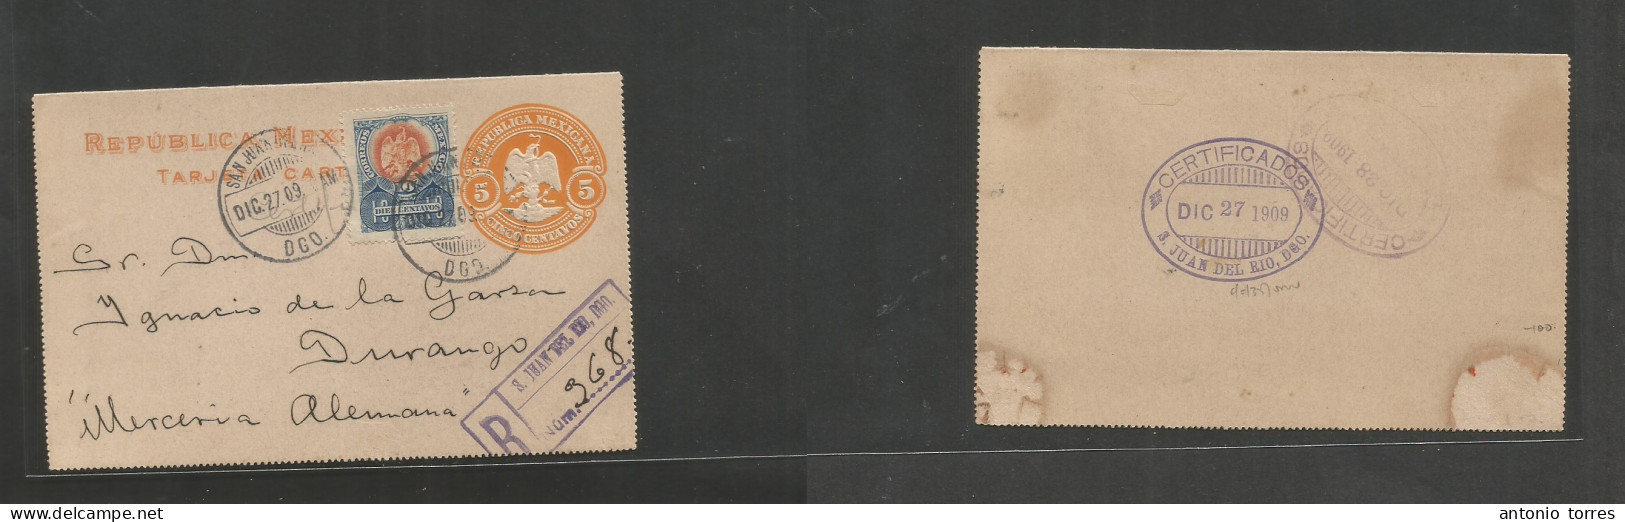 Mexico - Stationery. 1909 (27 Dic) San Juan Del Rio - Durango (28 Dic) Registered 5c Orange Stat Lettersheet + 10c Adtl, - Mexico